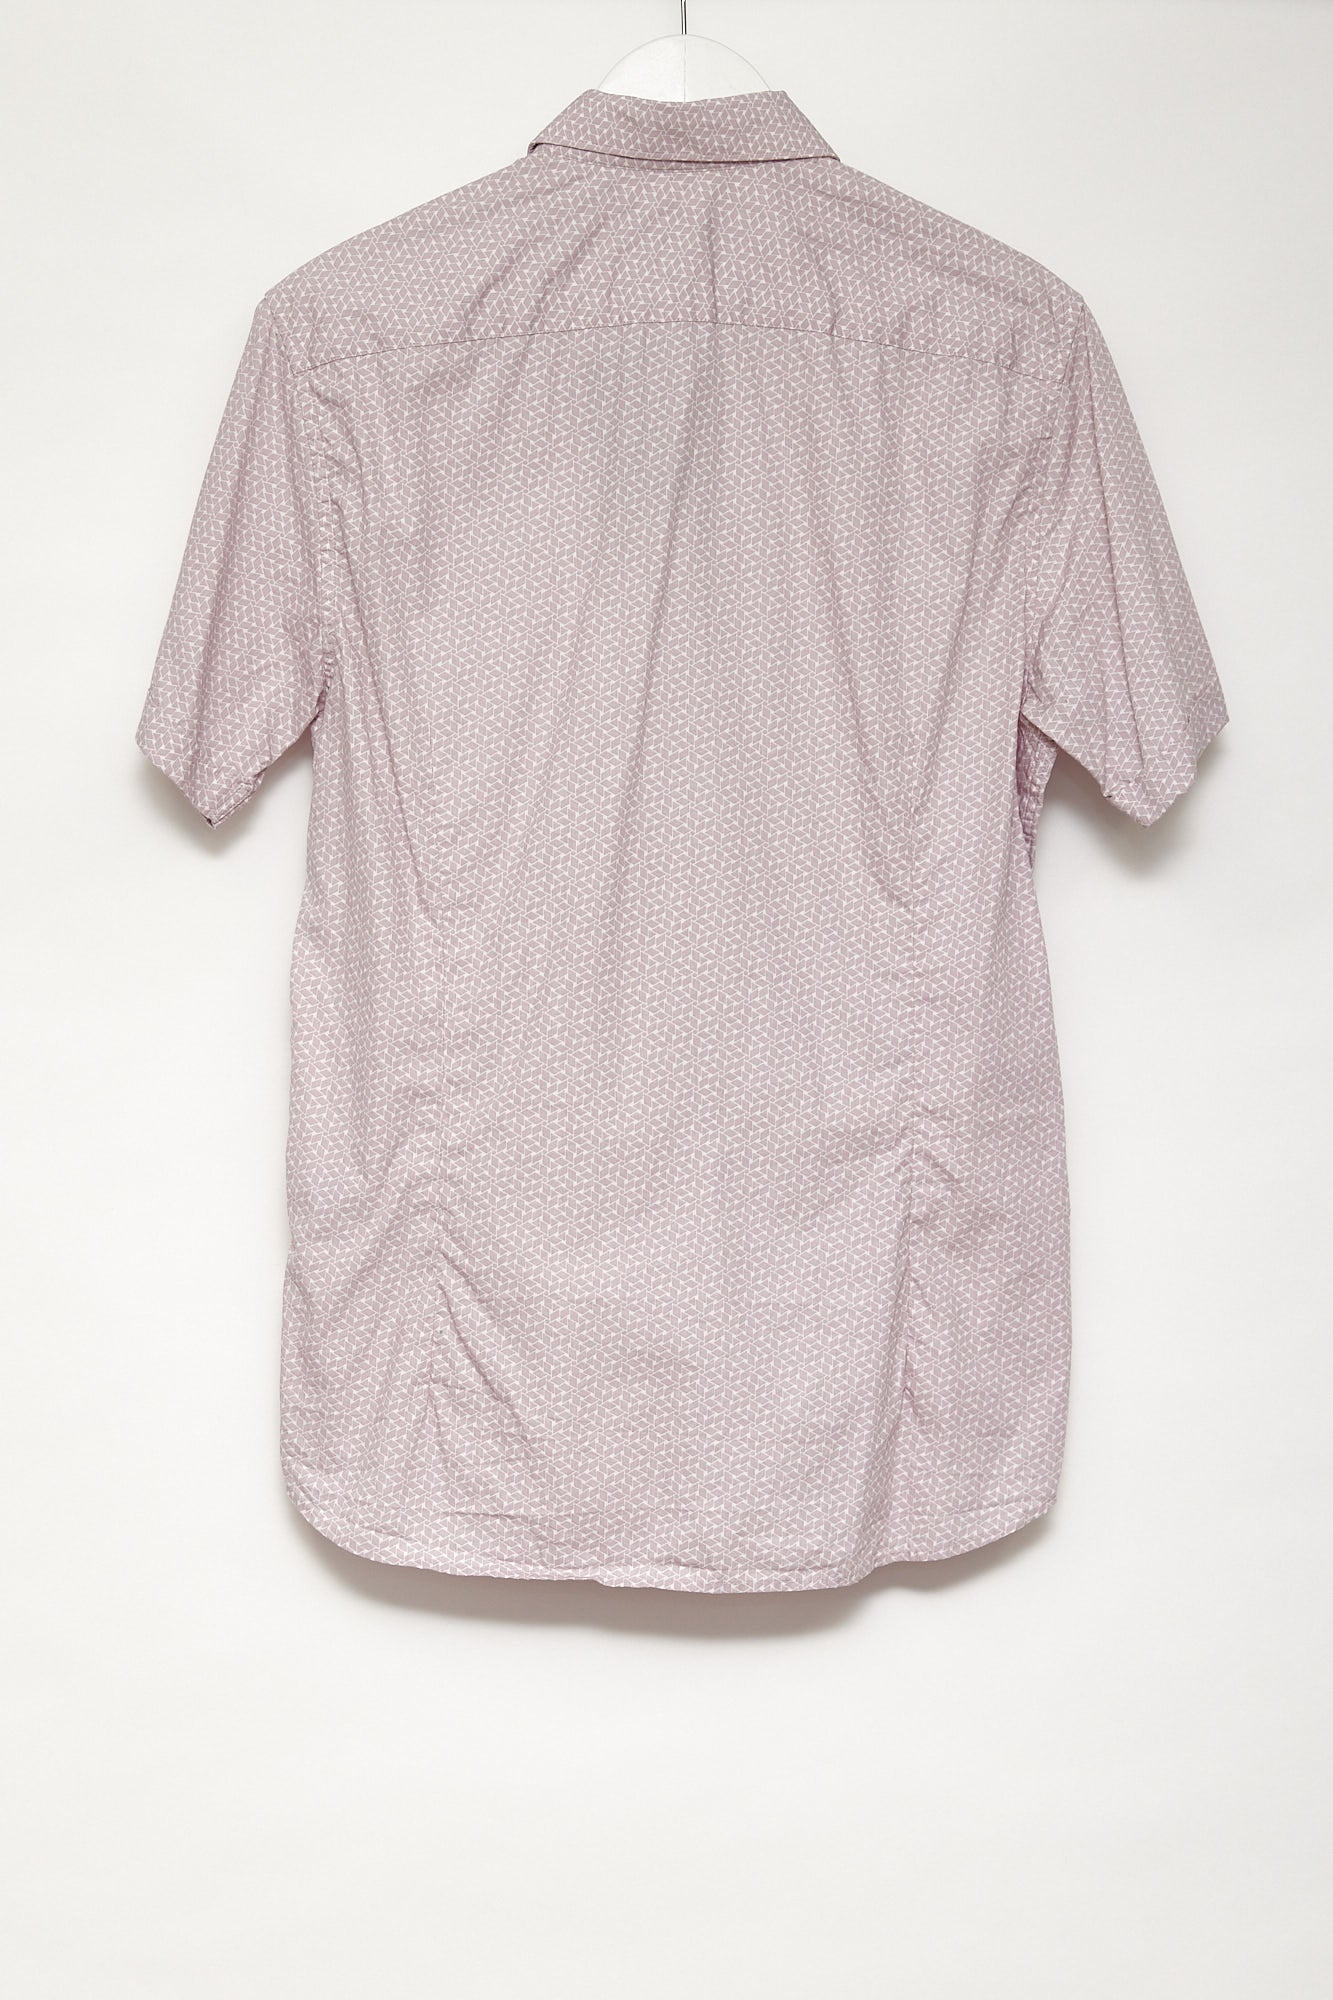 Mens Ted Baker short sleeve pink pattern shirt size medium